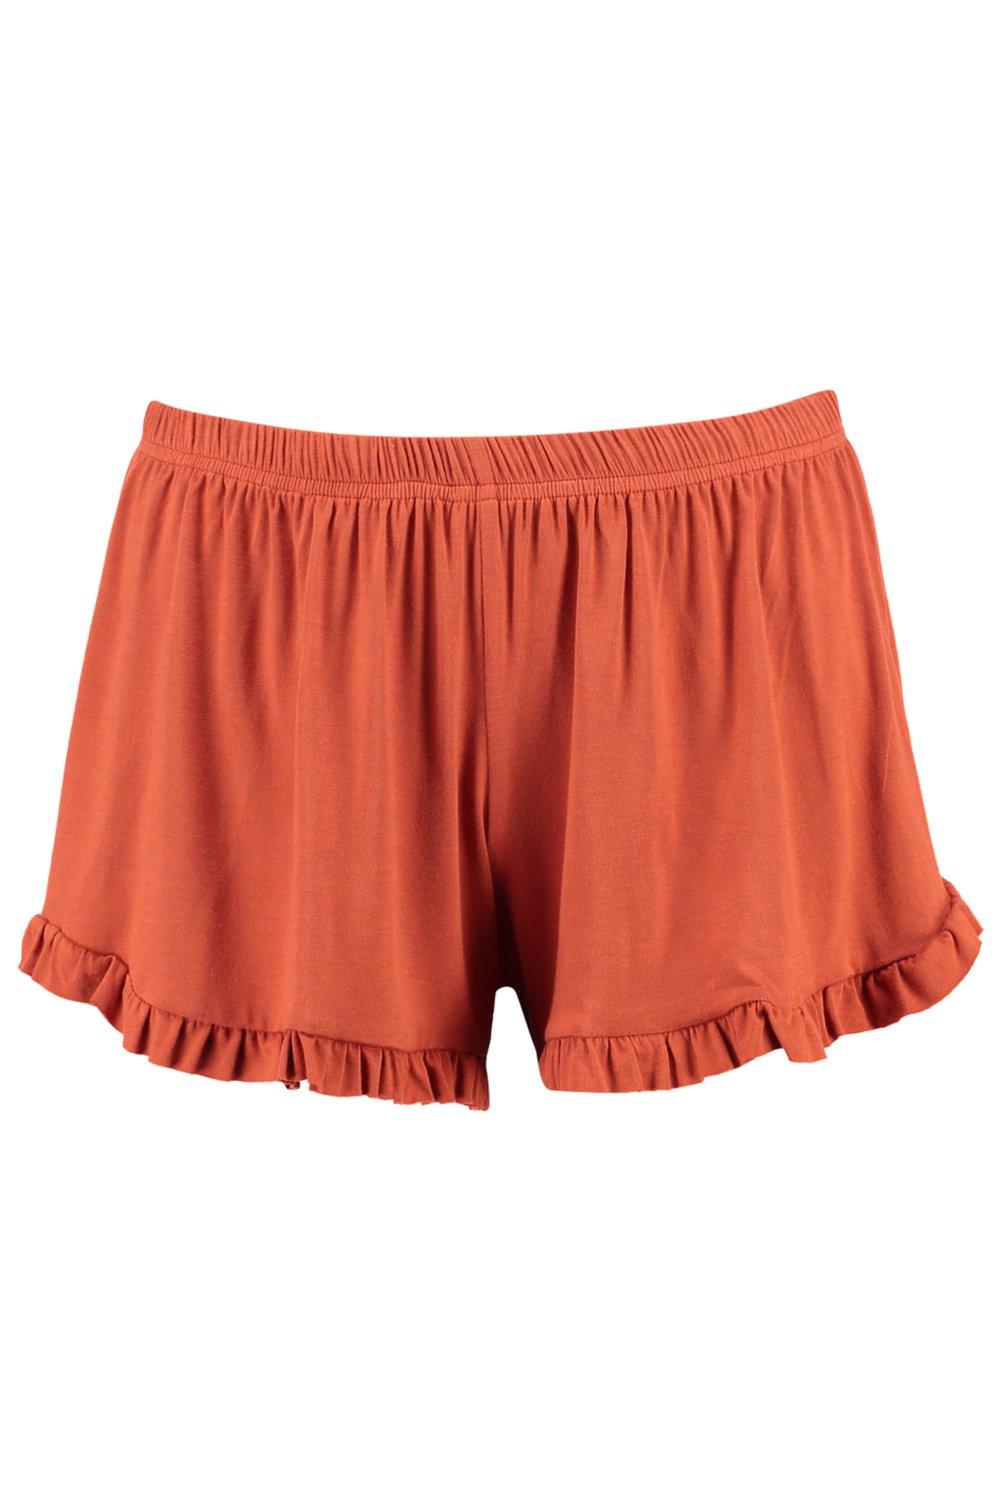 Boohoo Womens Jayne Ruffle Hem Jersey Shorts in Spice size 12 | eBay